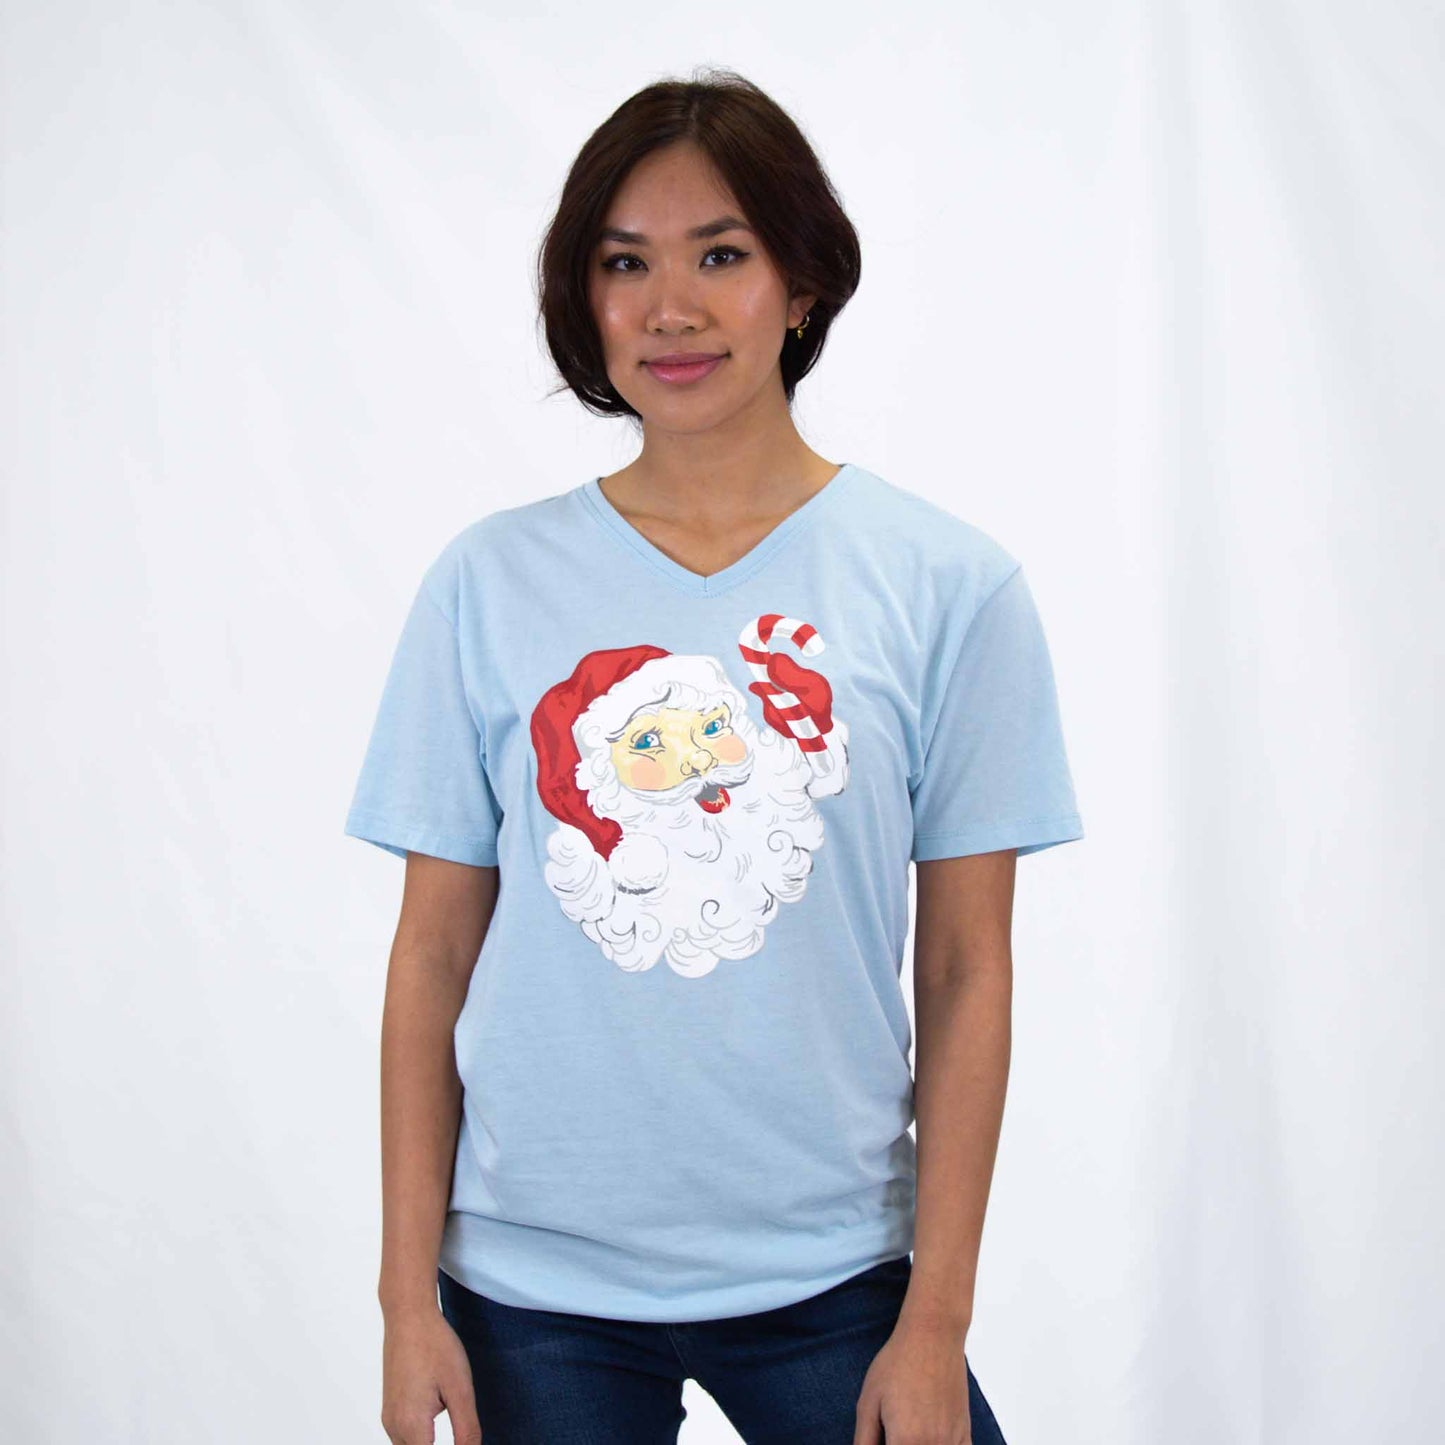 Candy Cane Santa T-Shirt in Glacier Blue